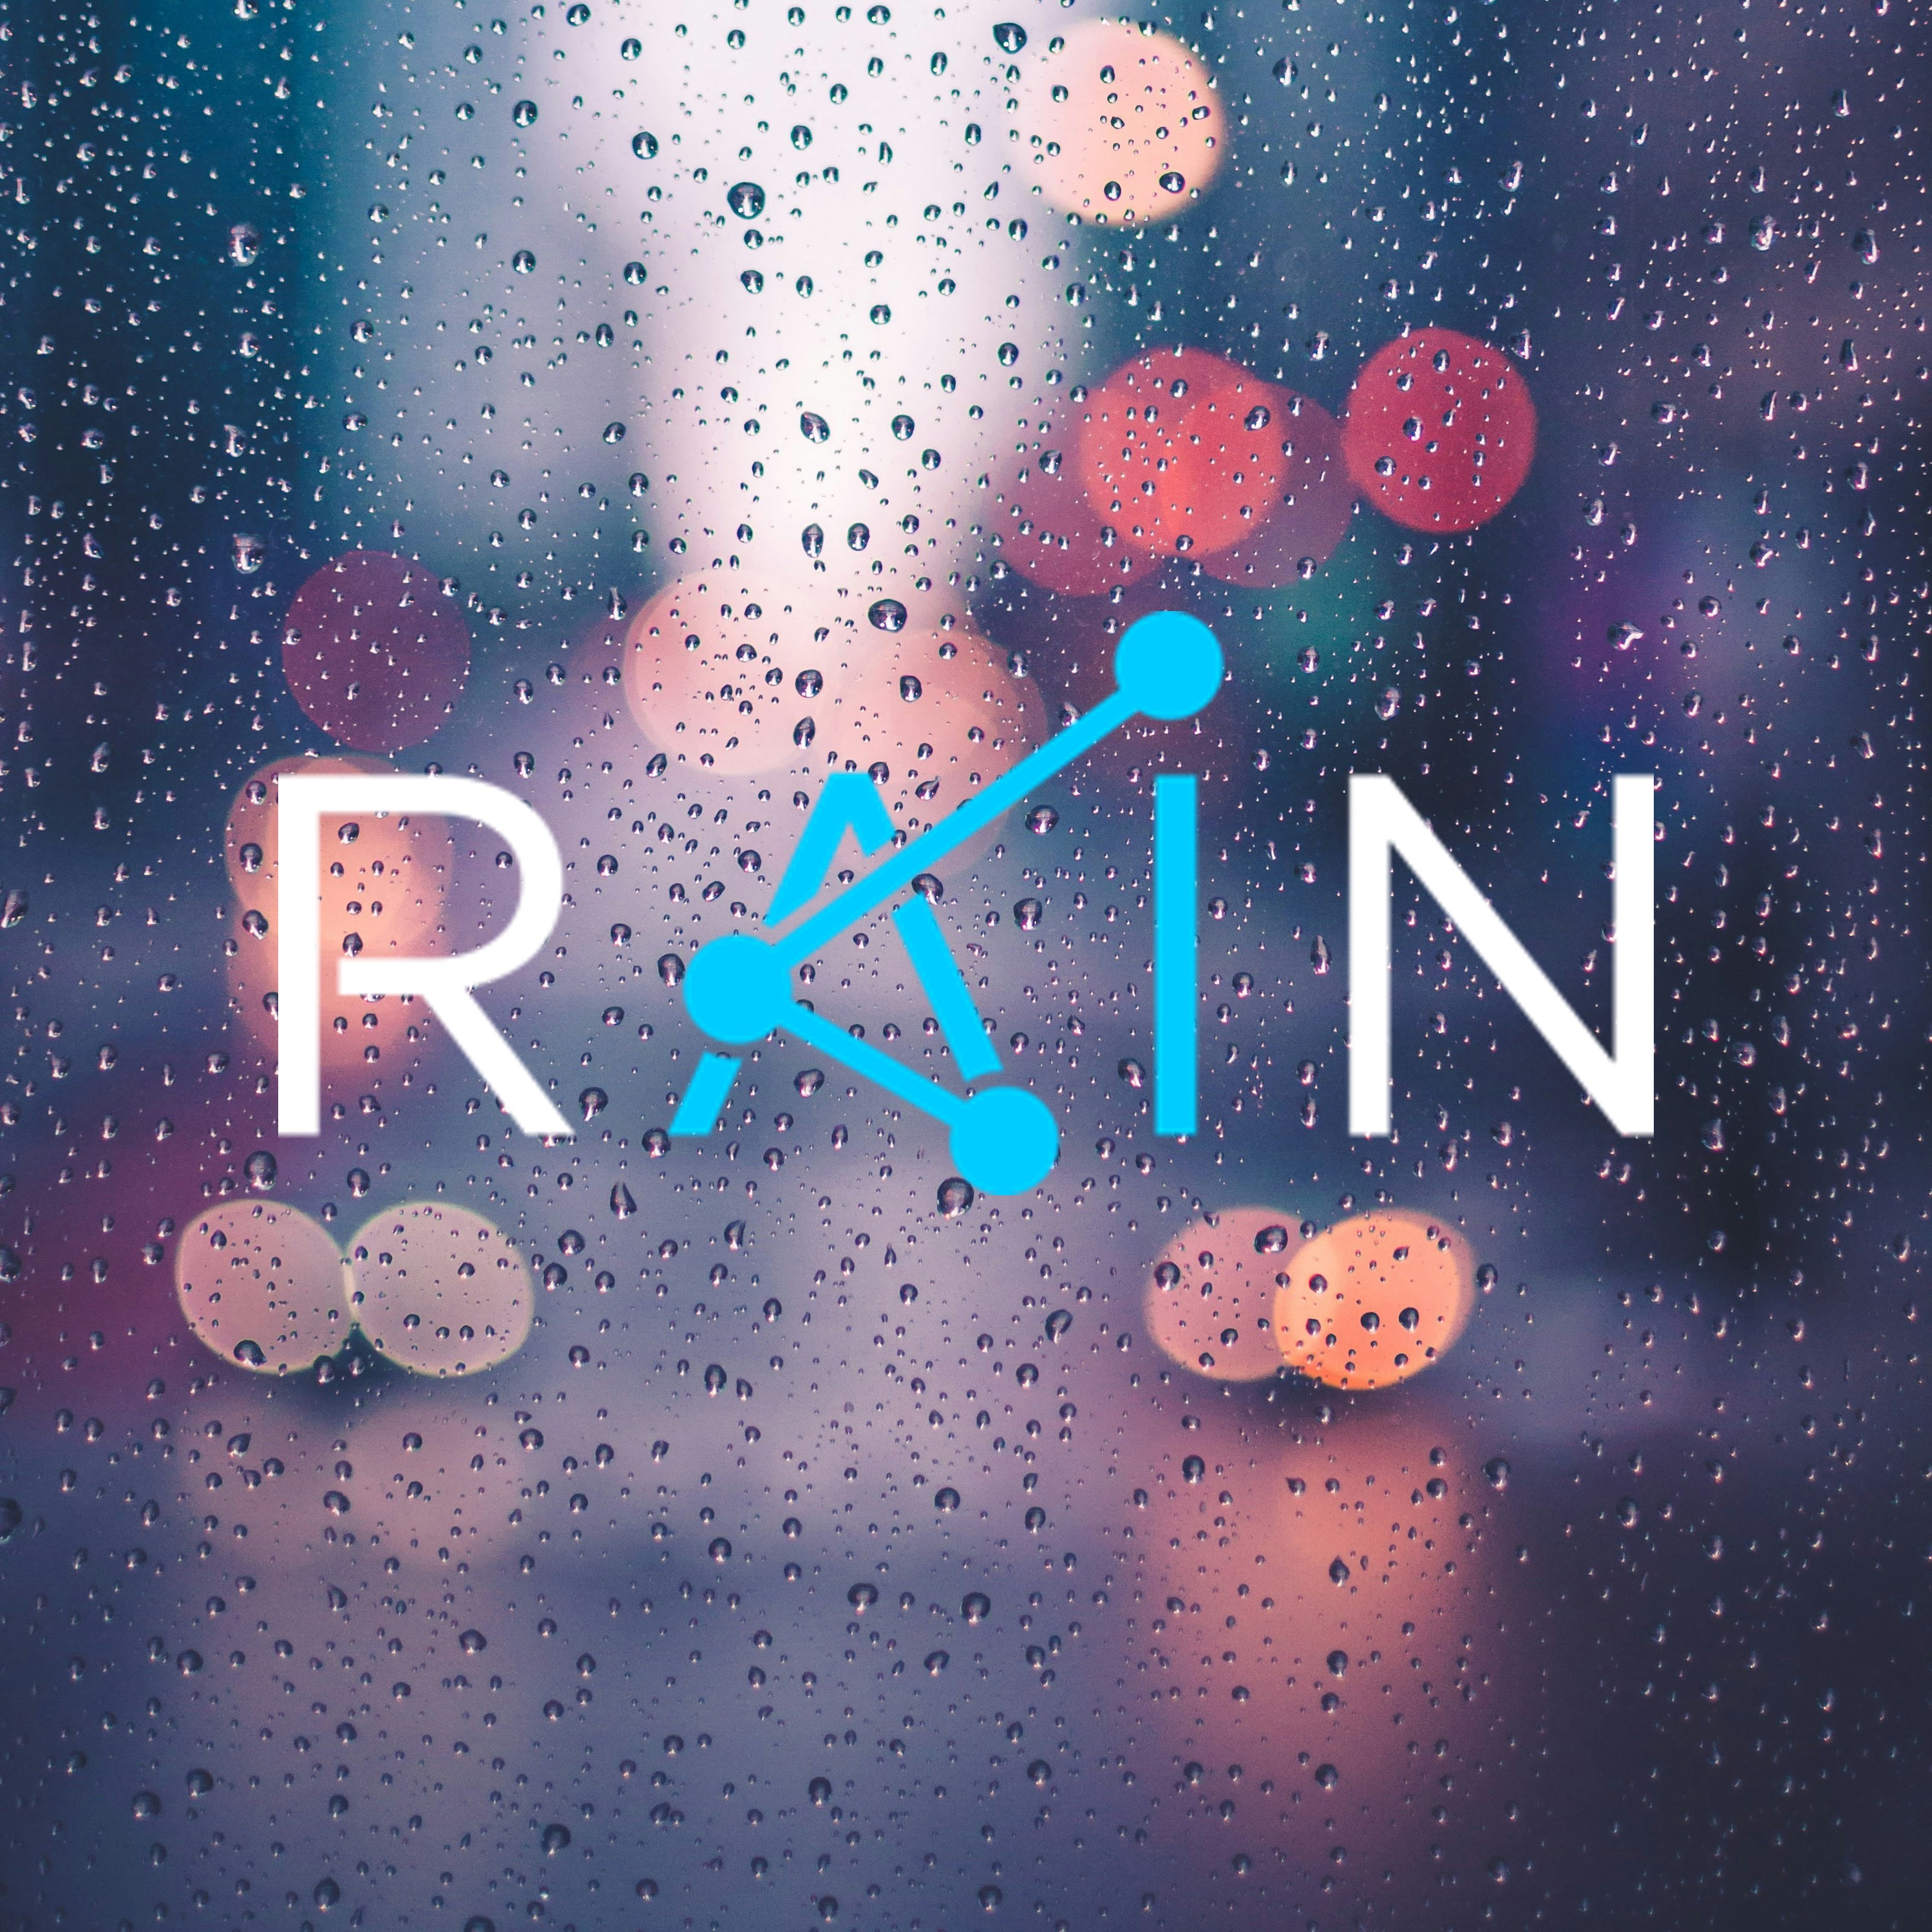 Expansion in Japan for US chip developer Rain AI